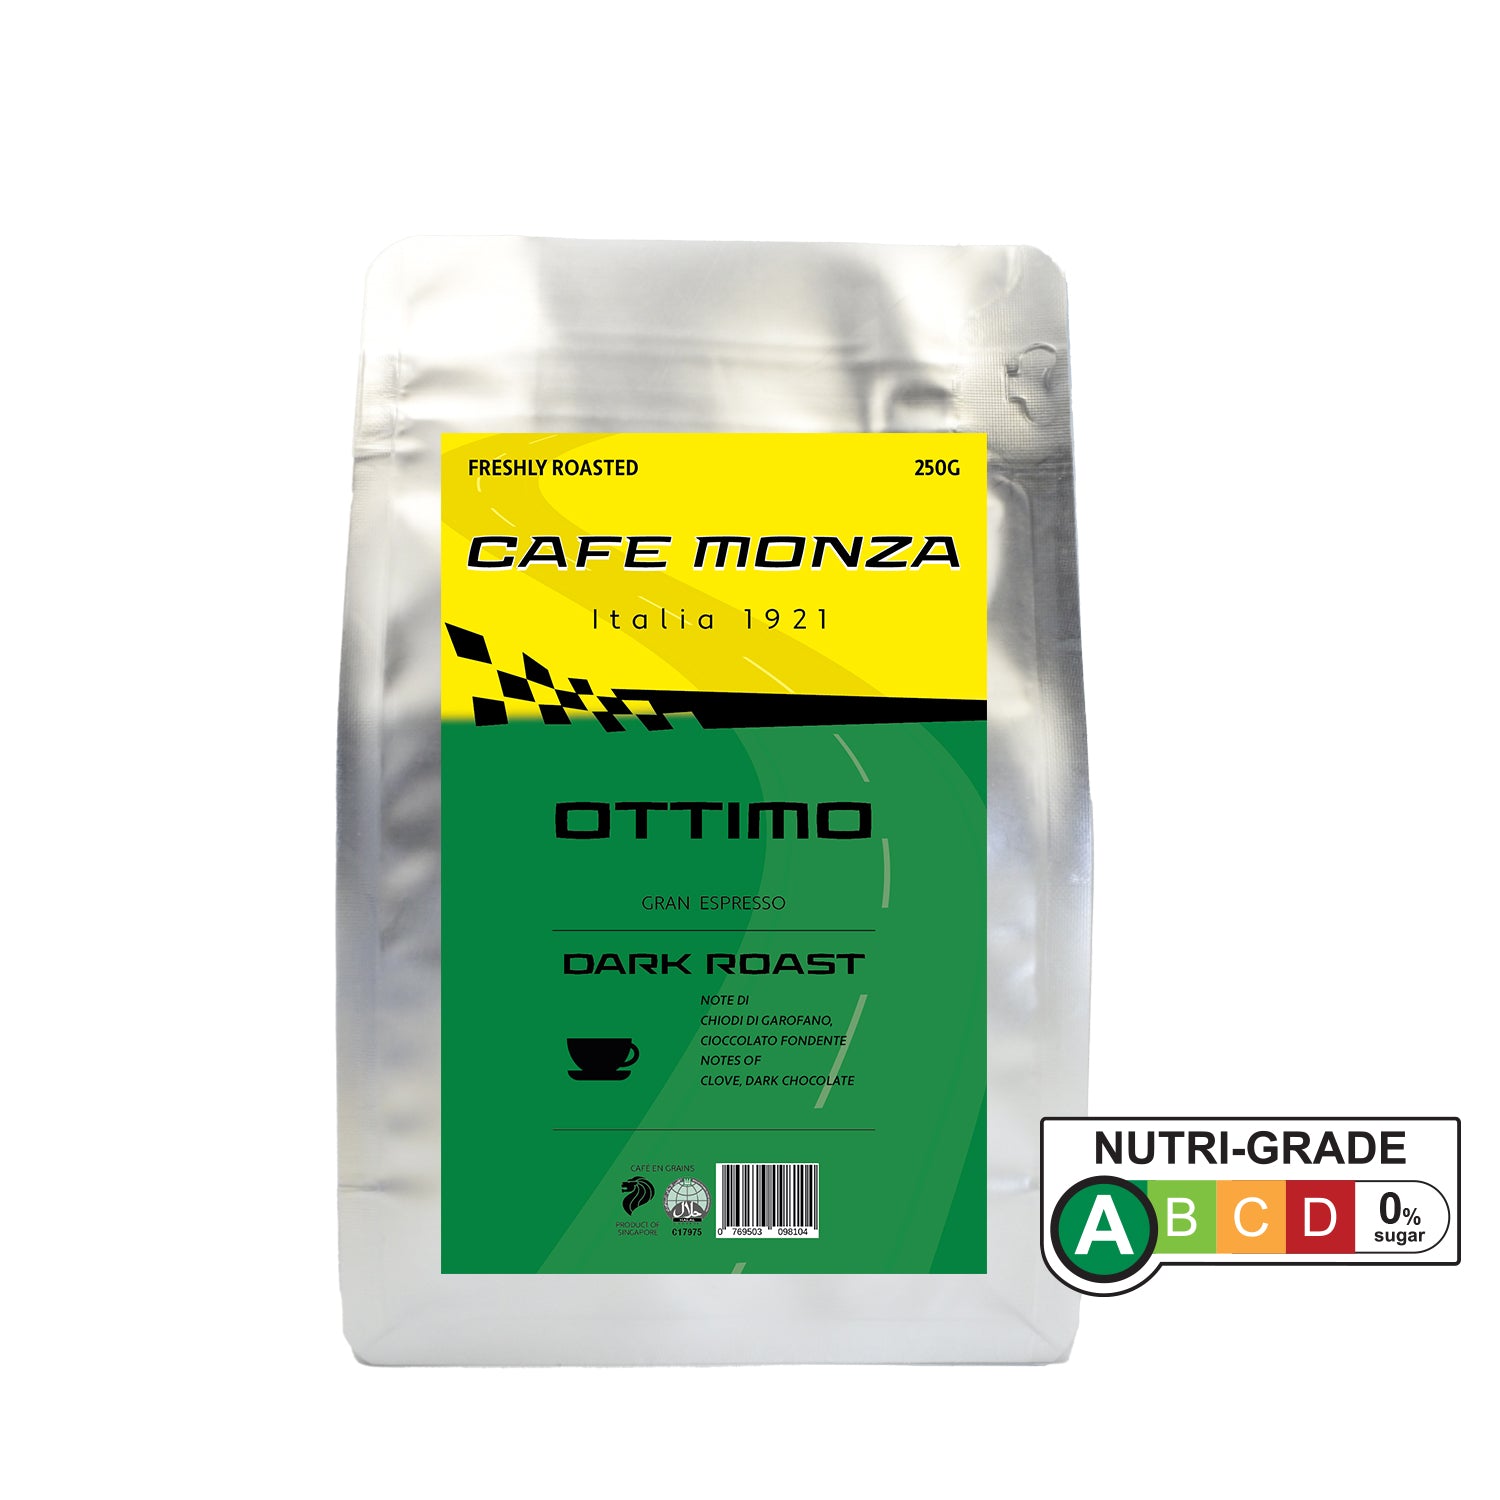 Cafe Monza Ottimo Blend 250g